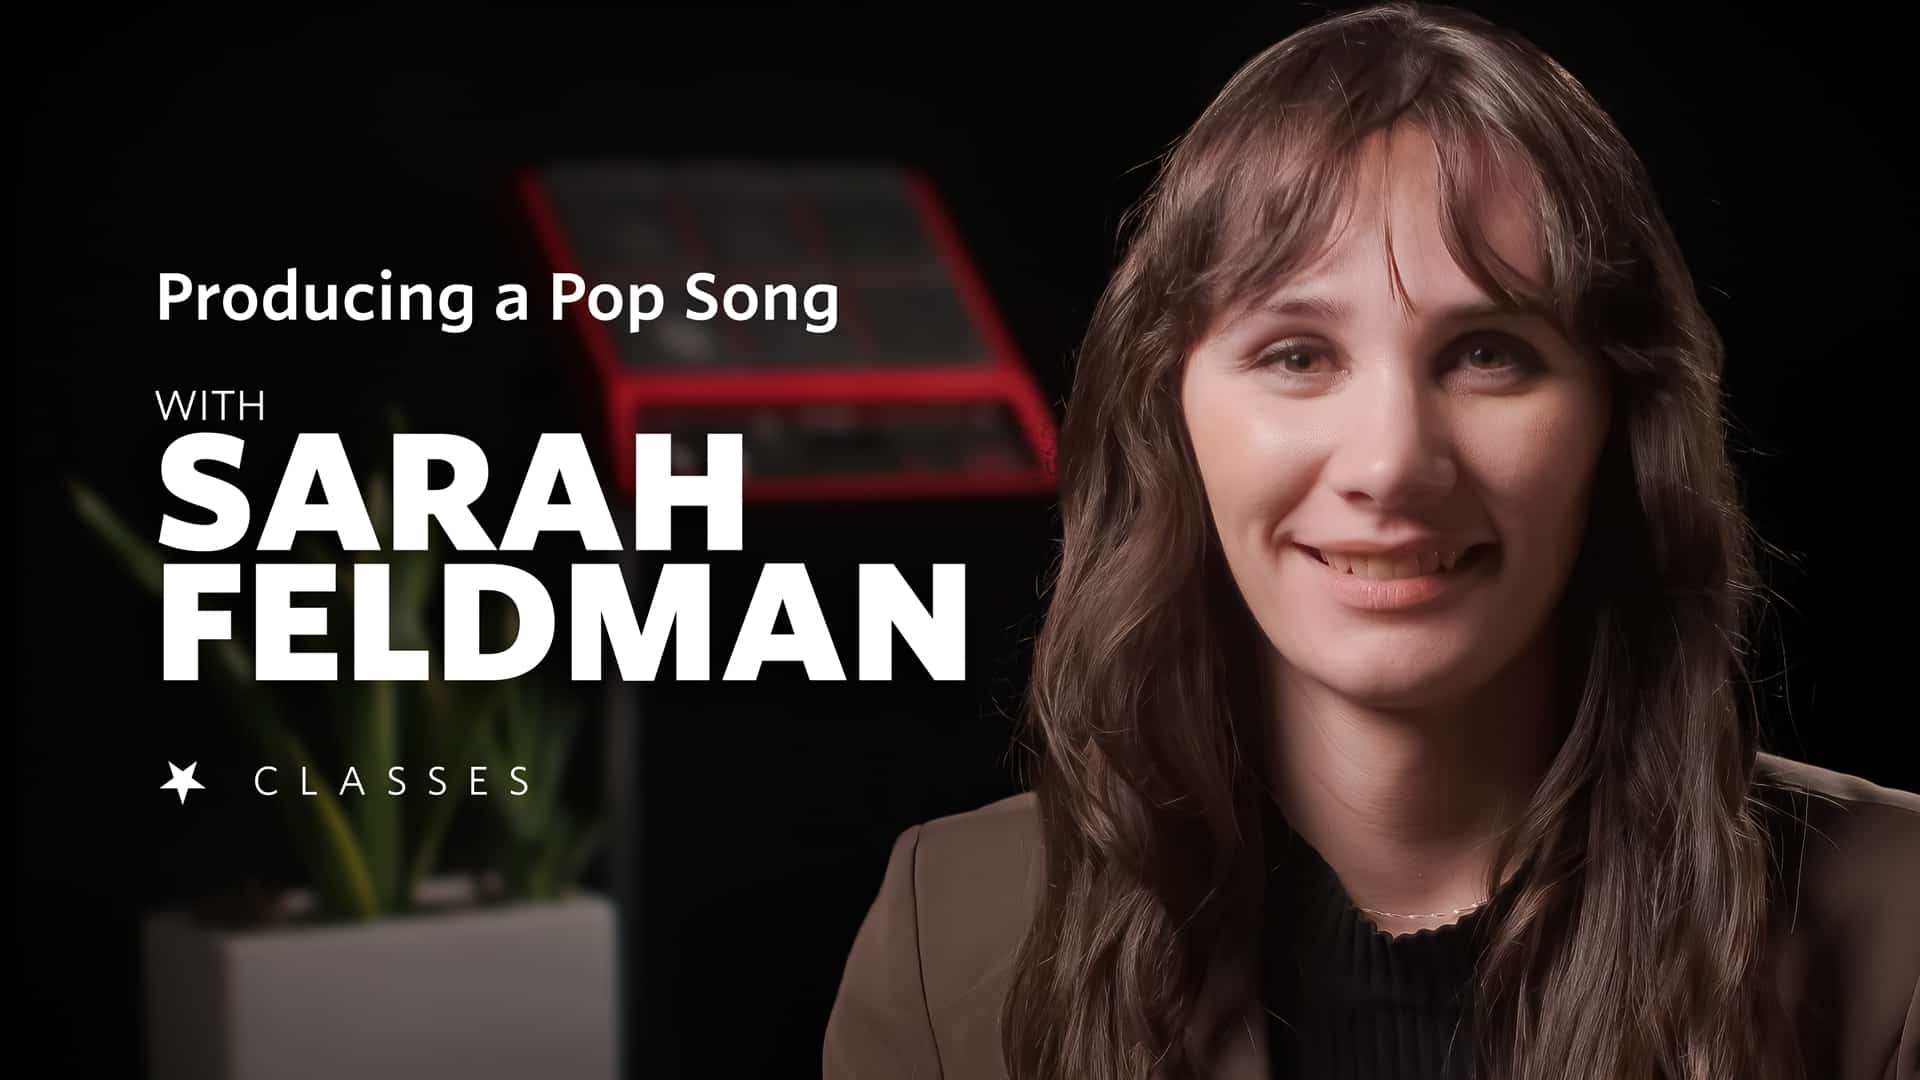 Producing a Pop Song with Sarah Feldman, a Nebula Class